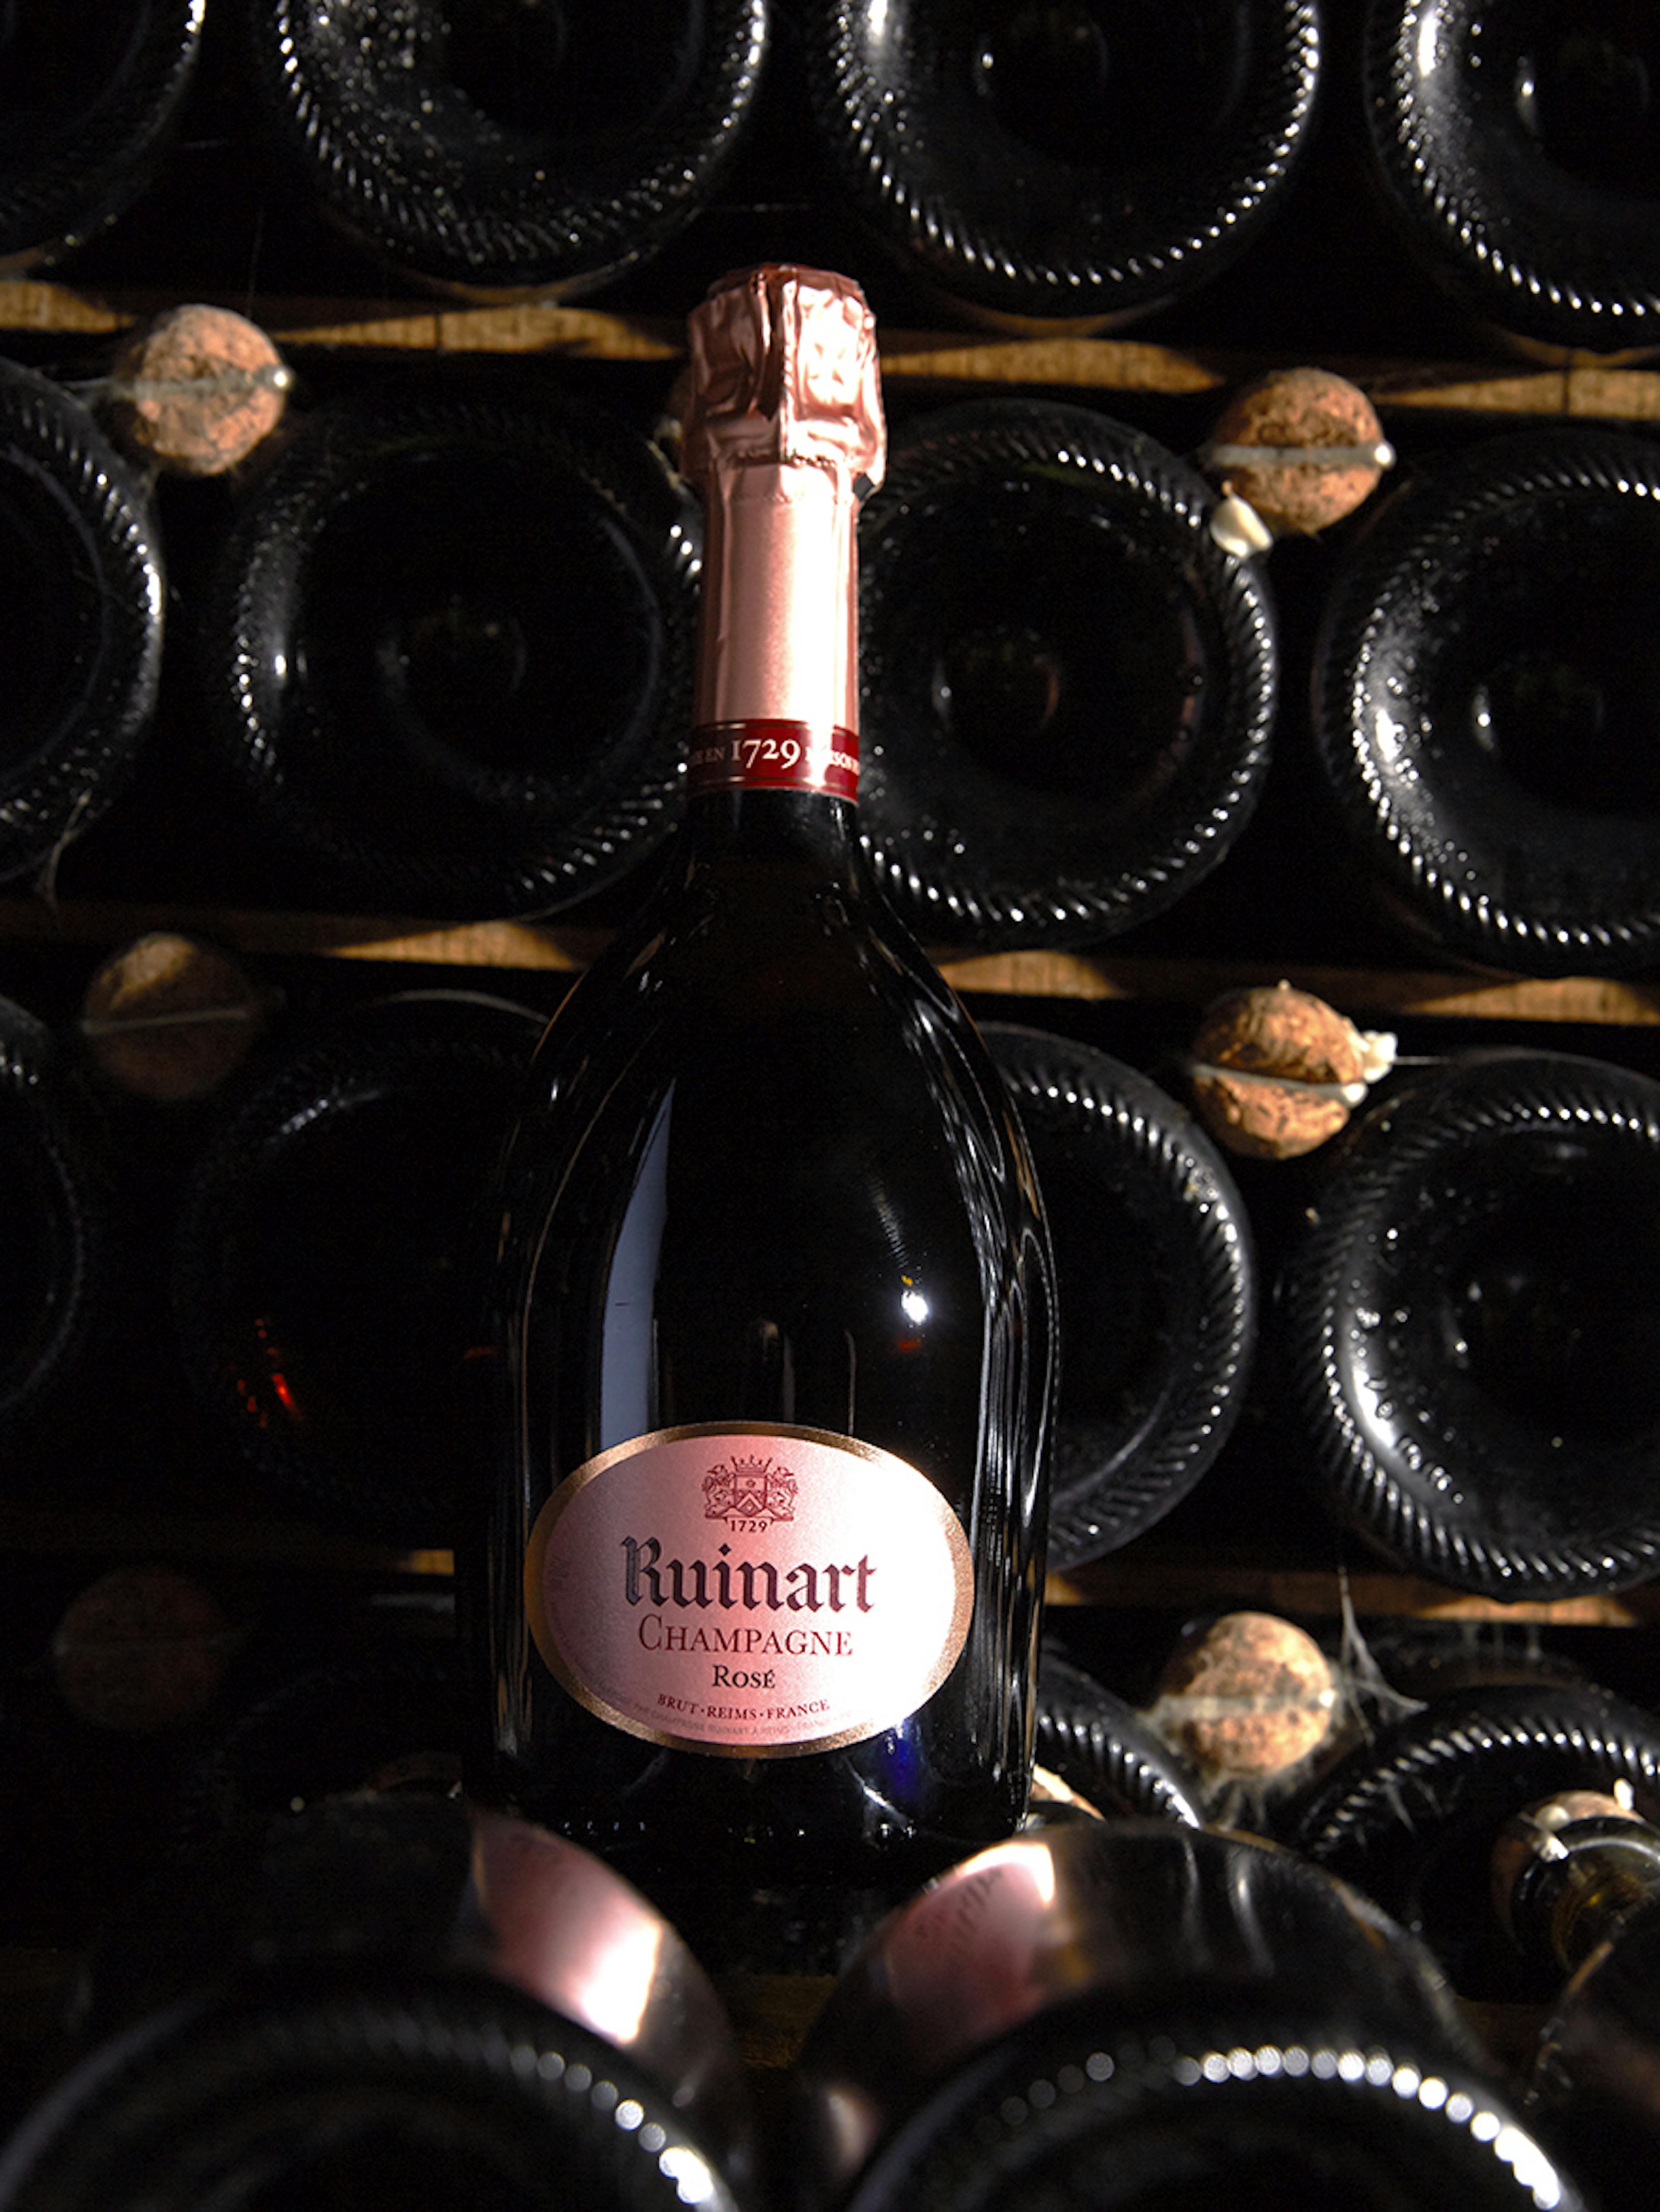 In 1764, Ruinart created Ruinart Rosé, the world’s first rosé champagne.